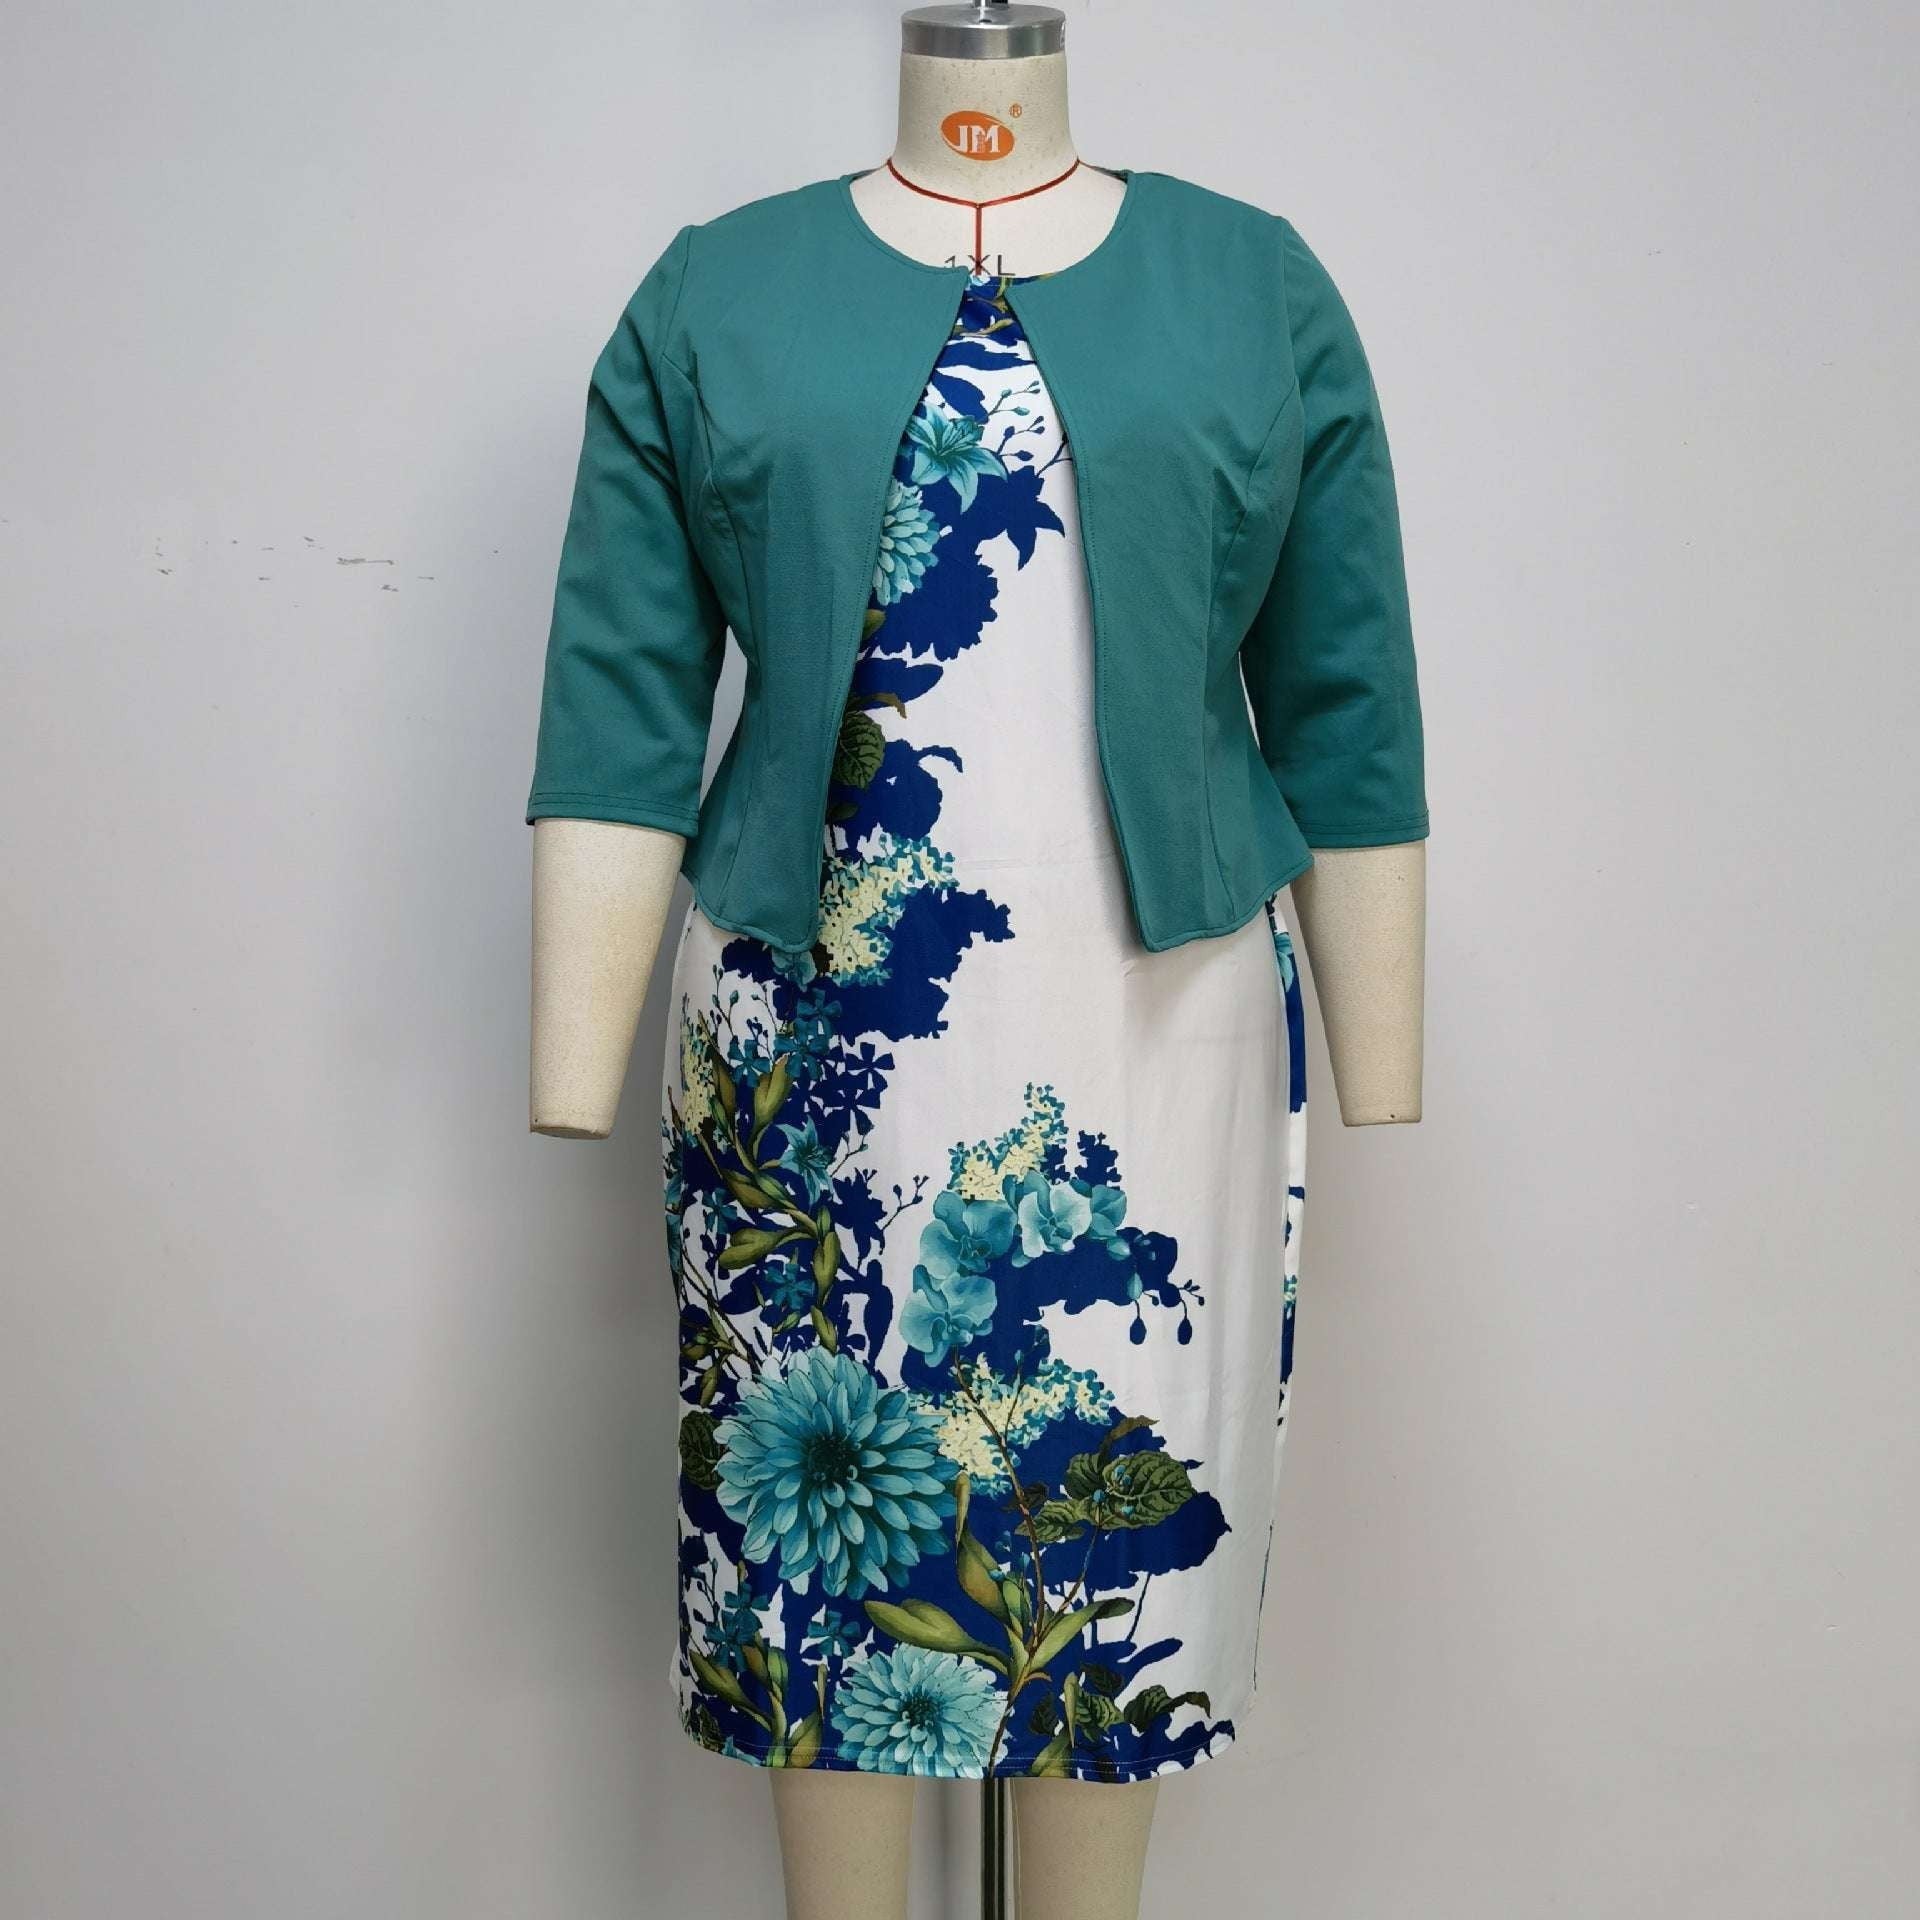 Fashionable dress, Stylish dress, Women's fashion - available at Sparq Mart